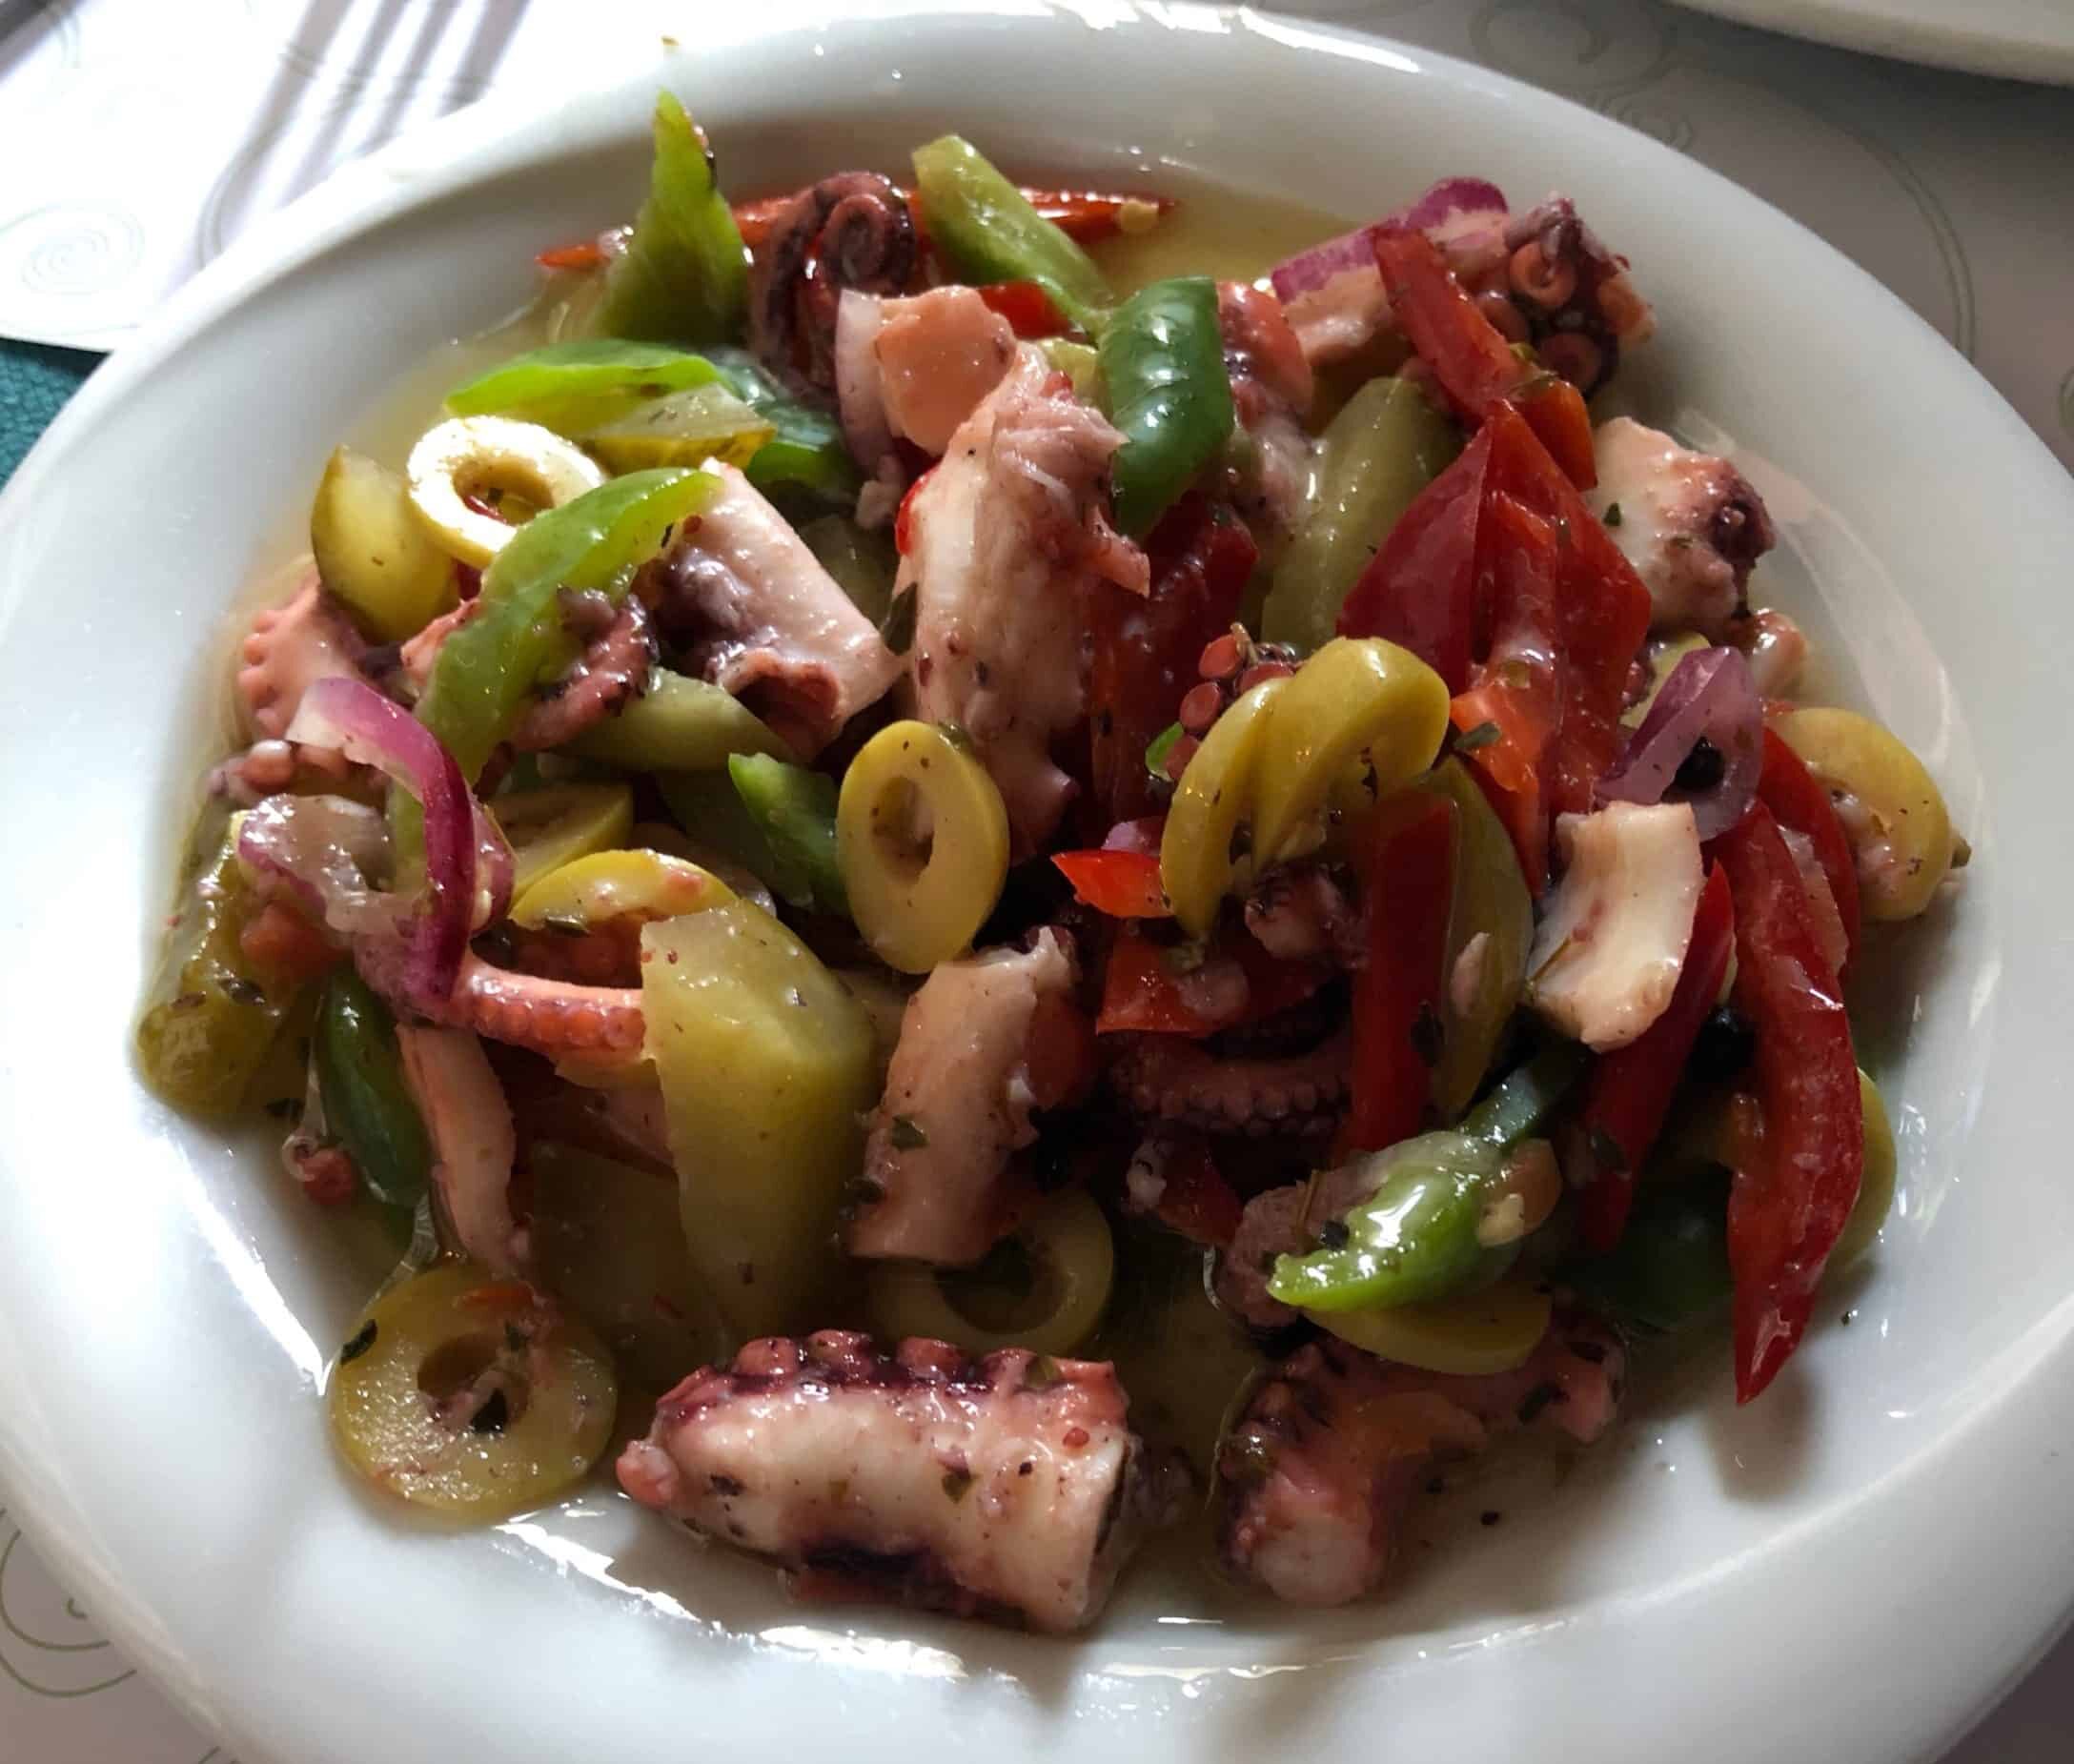 Octopus salad at Fıccın